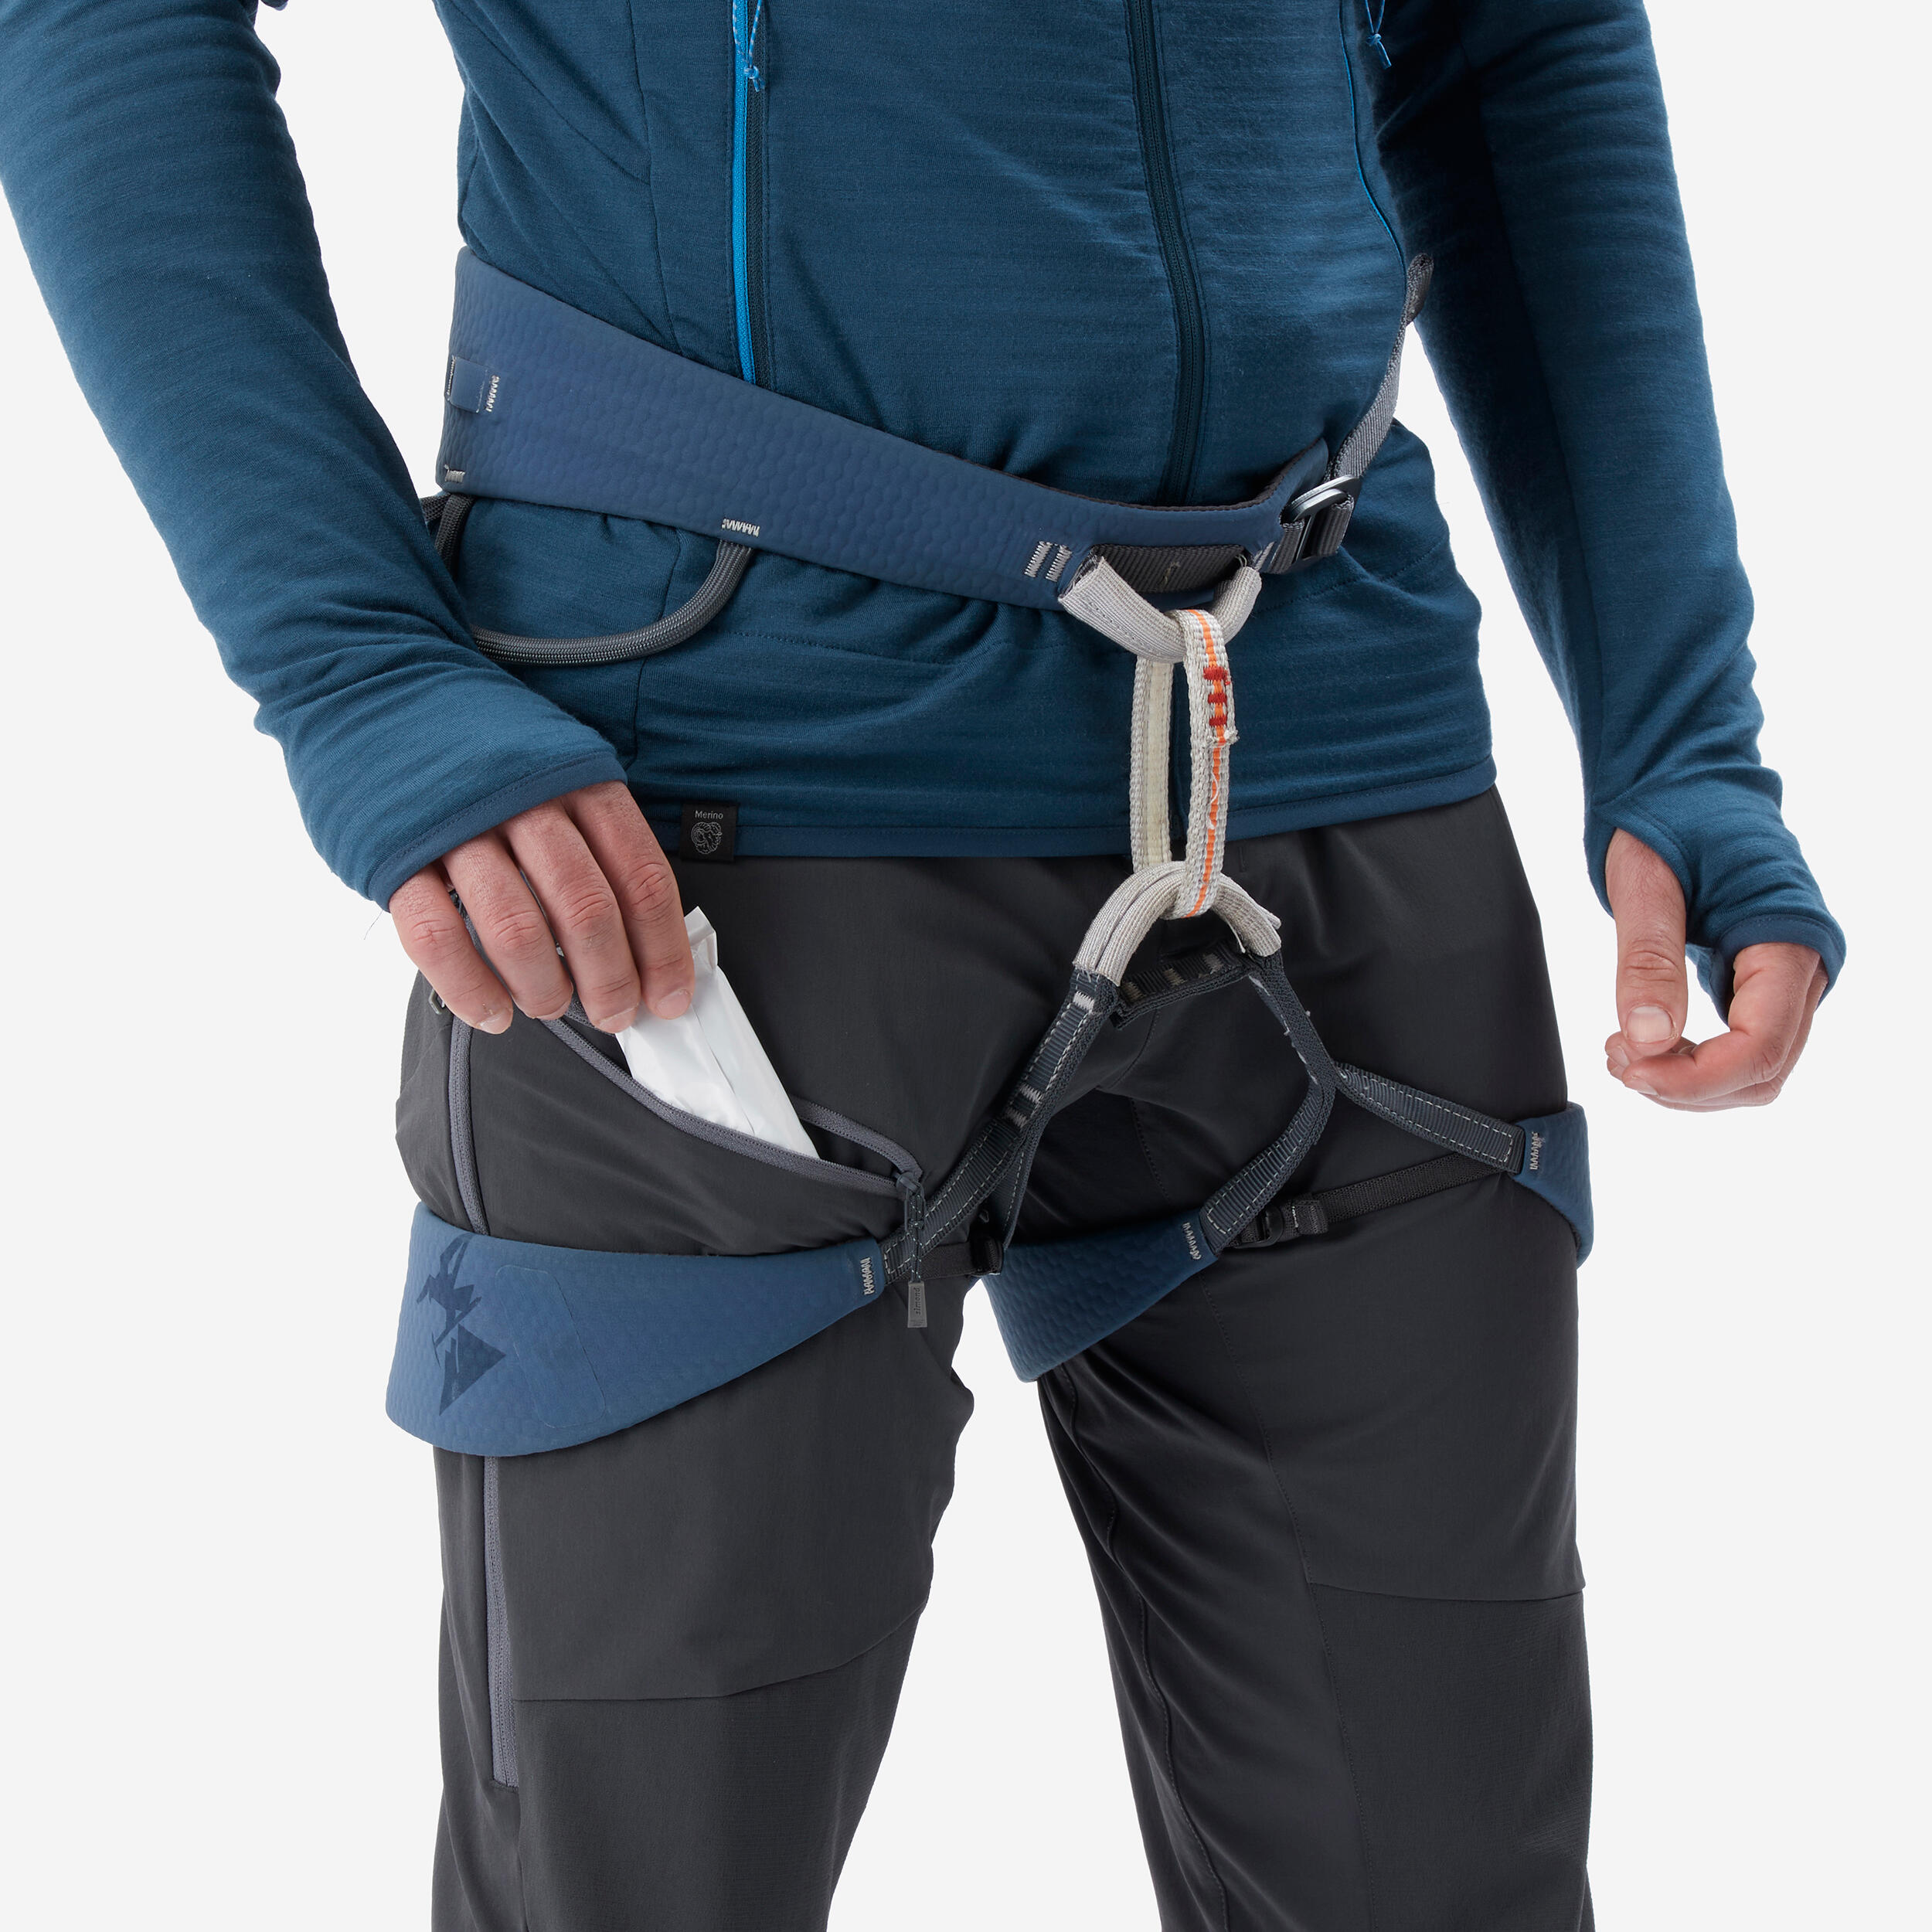 Men’s Mountaineering Trousers - ALPINISM LIGHT EVO - GREY 6/6